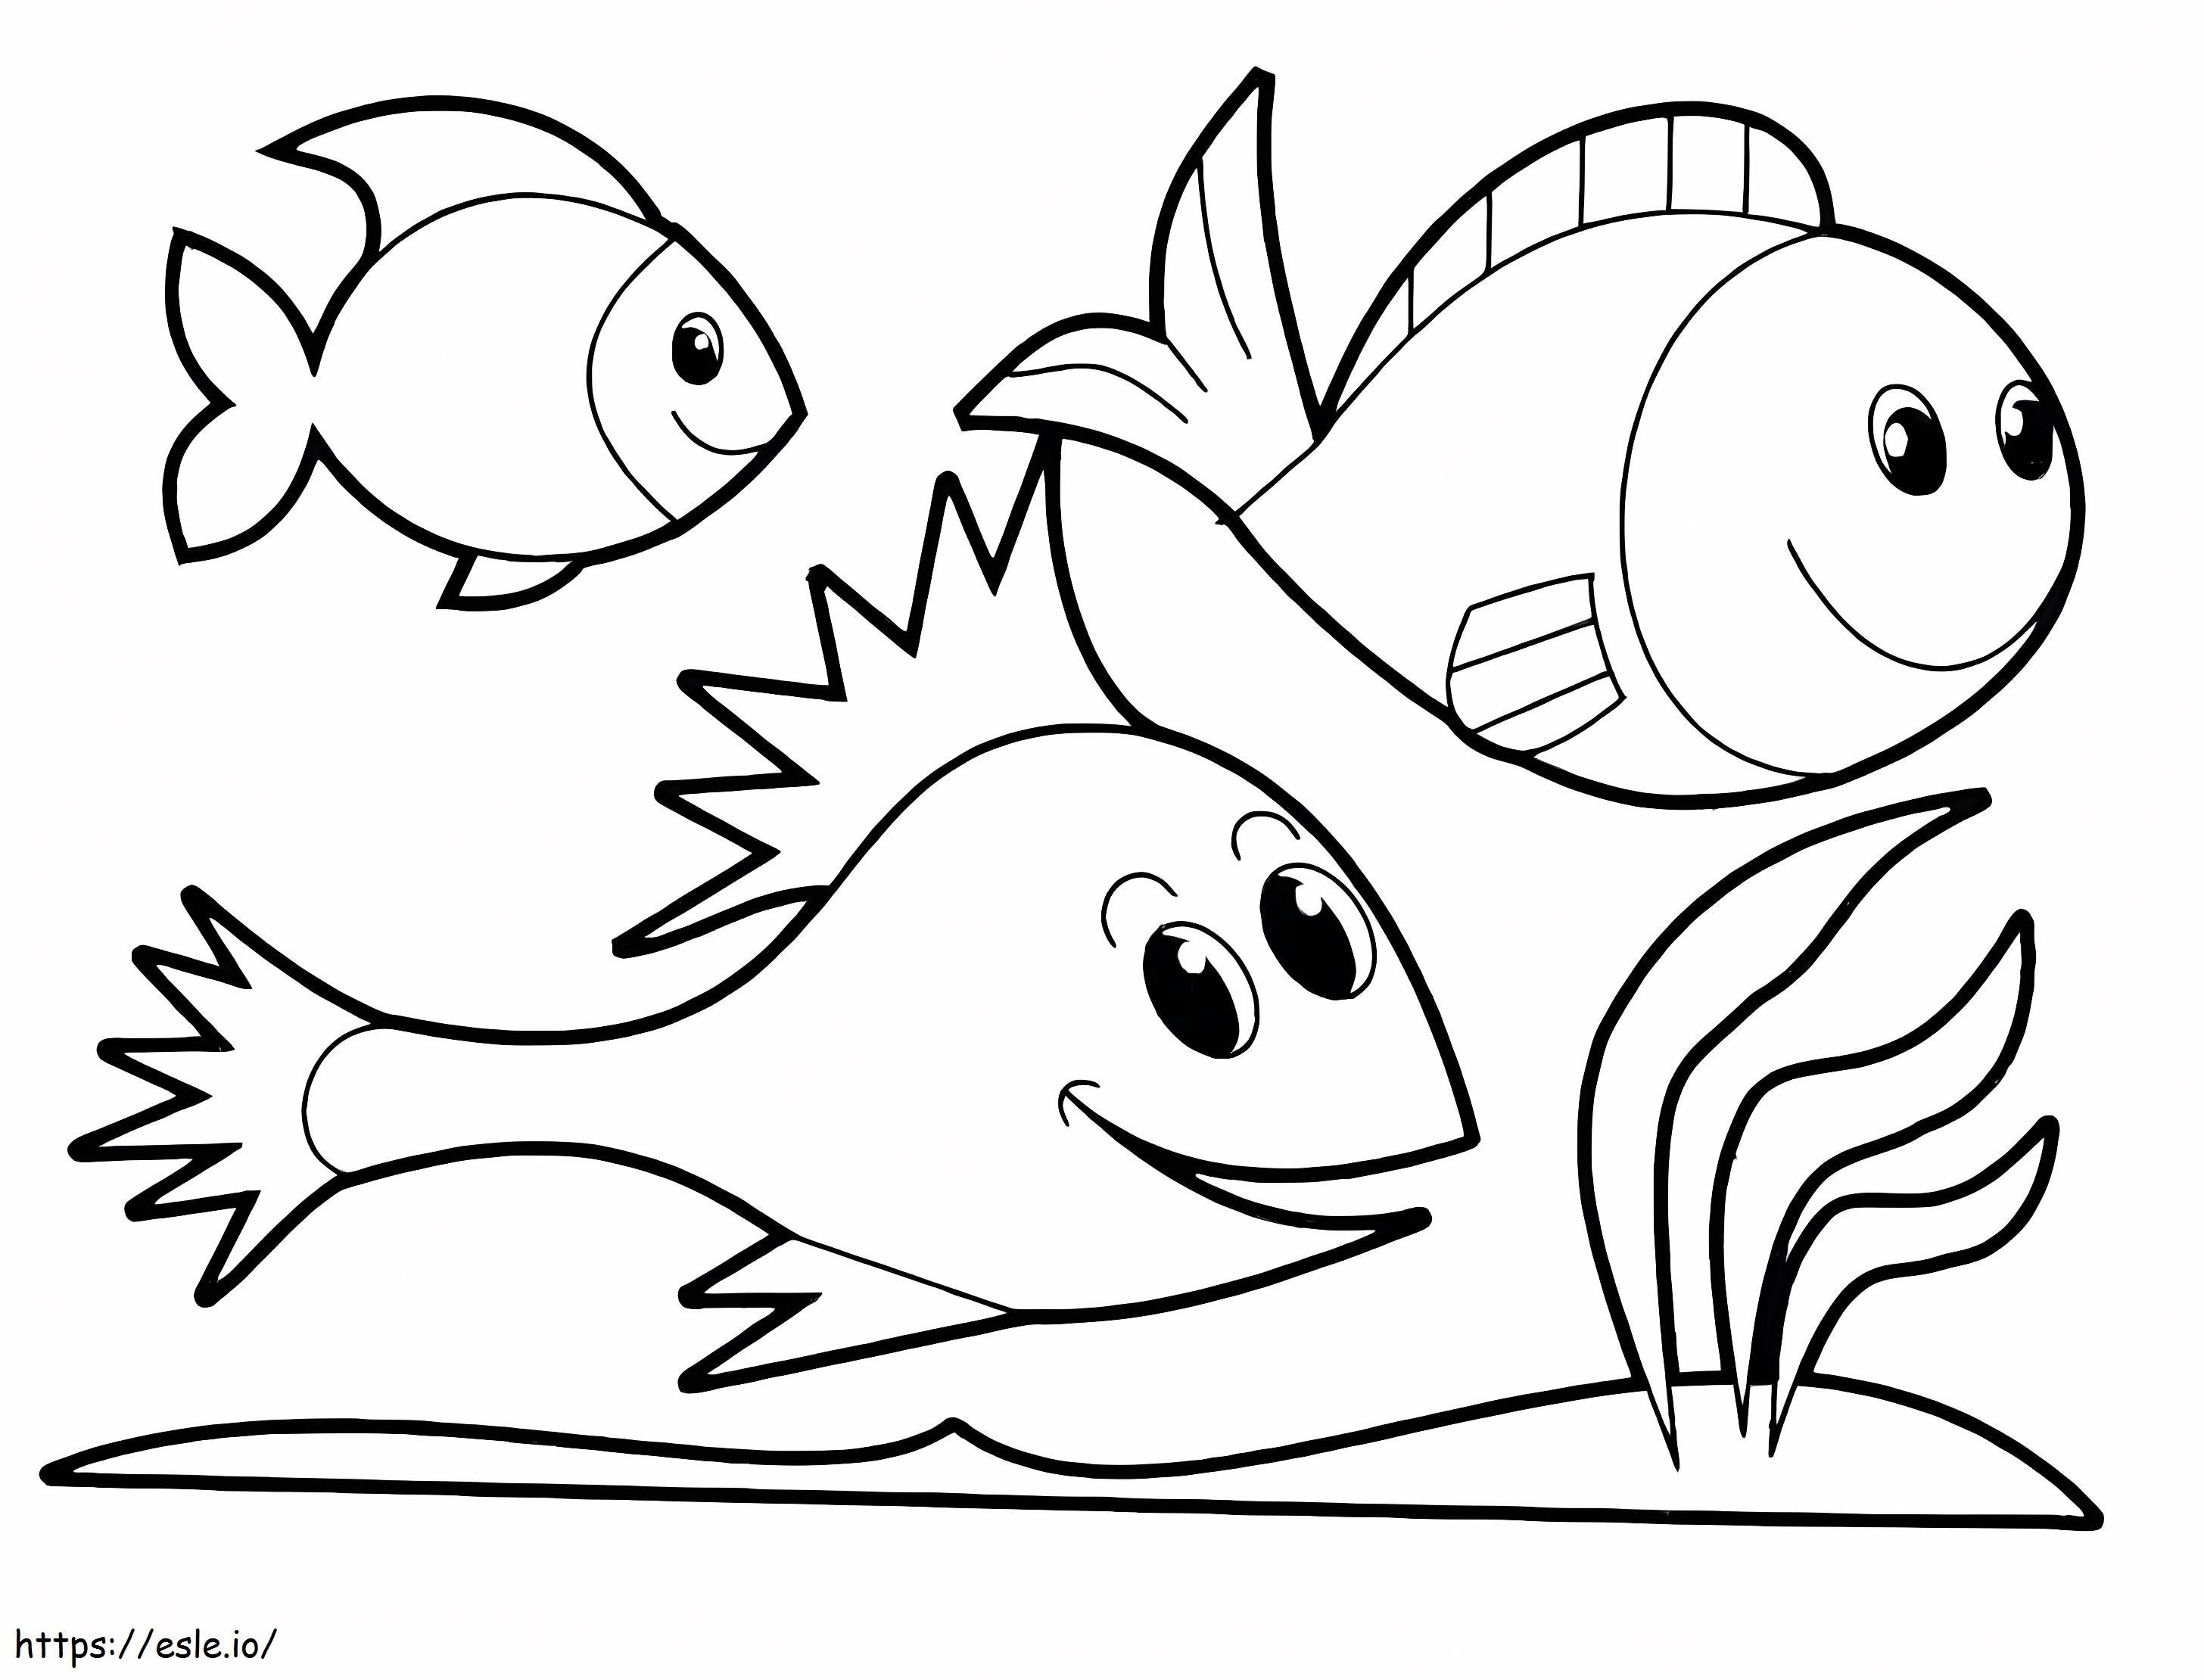 Three Cute Fish coloring page